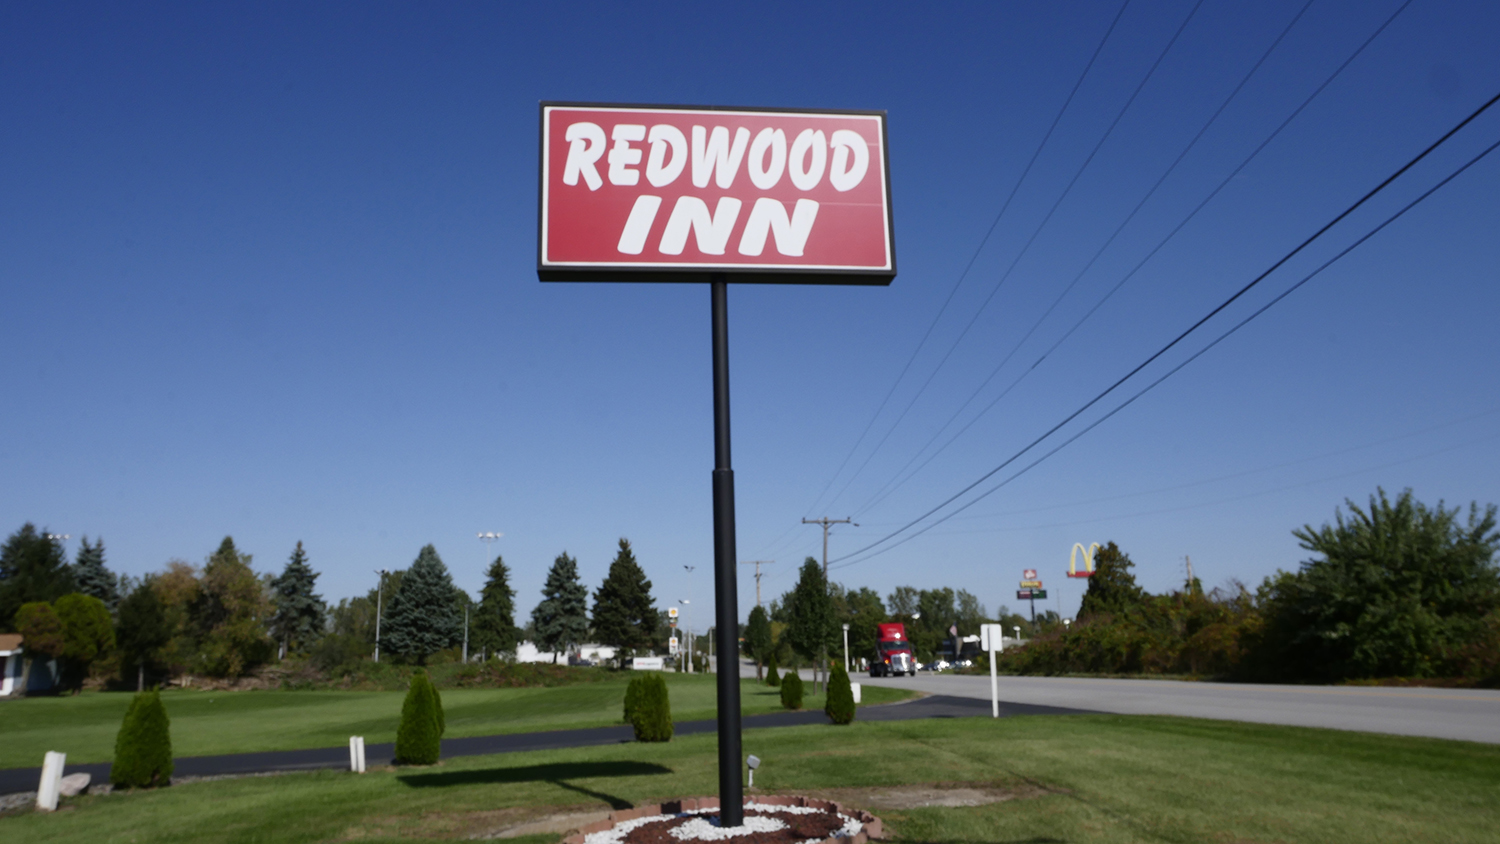 Redwood Inn Fremont Indiana - Steuben County Tourism Bureau